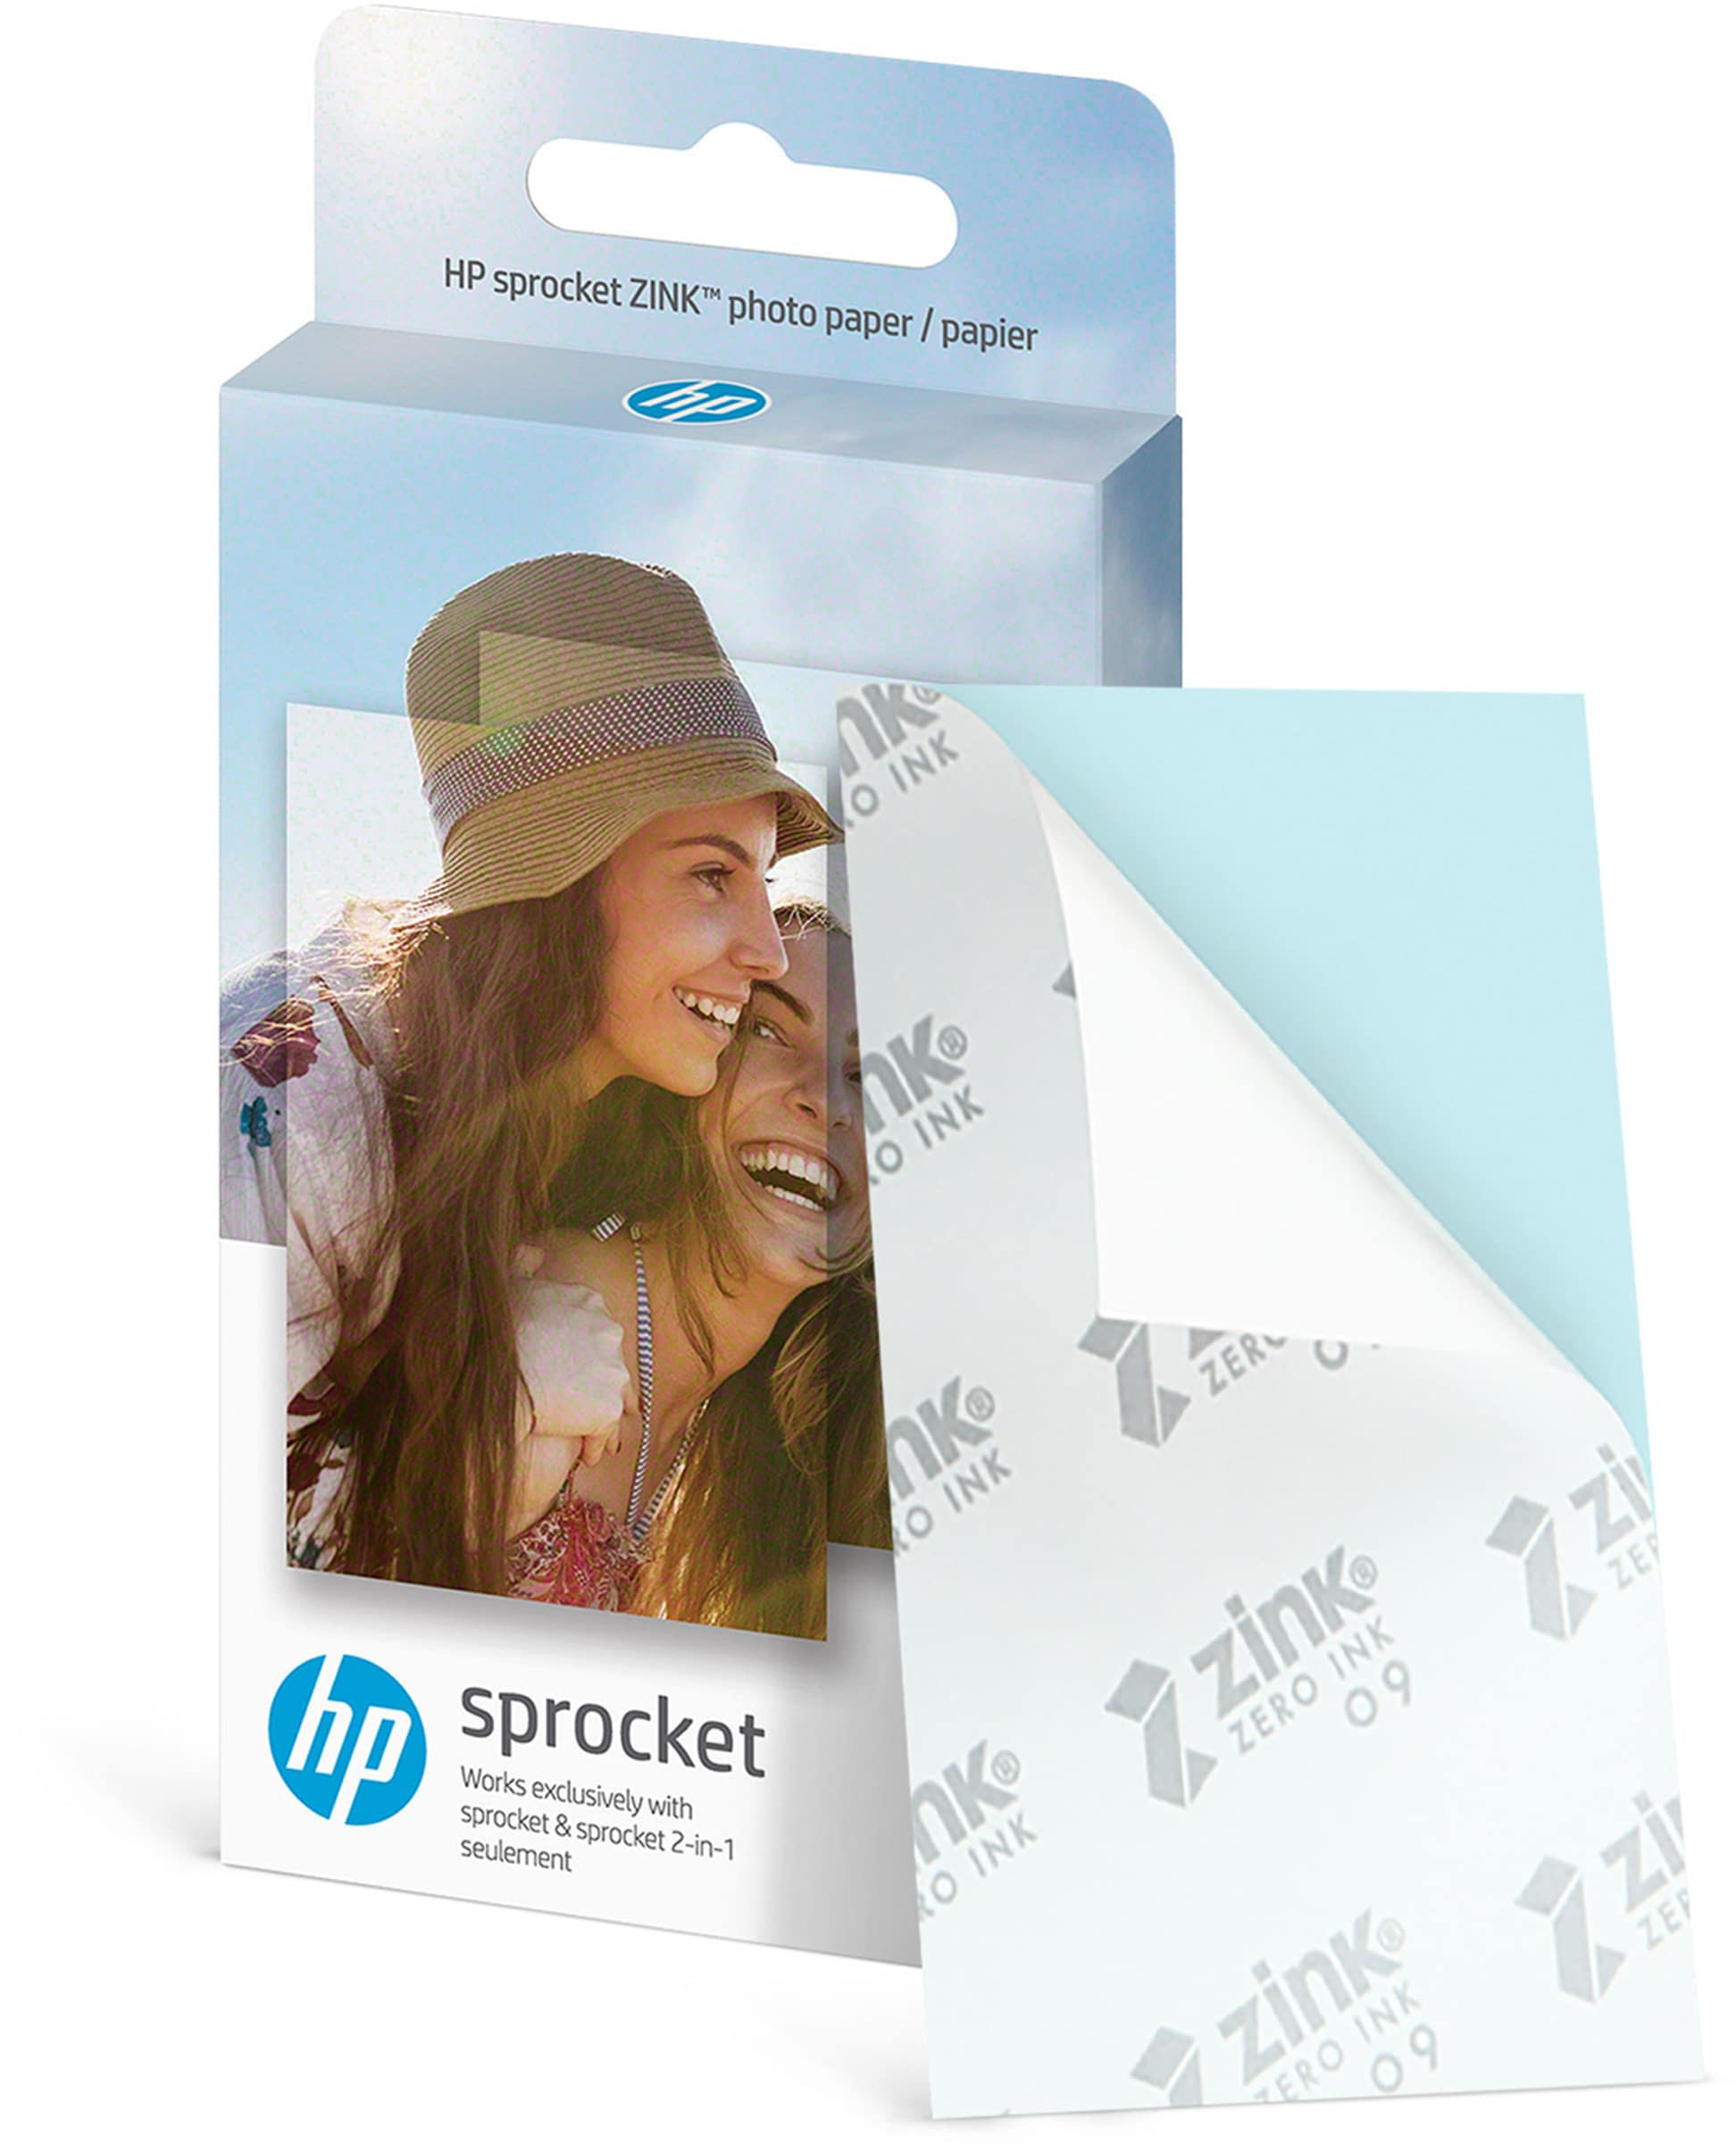 Gewoon toxiciteit beweeglijkheid HP Sprocket 2x3" Zink Photo Paper (20 Sheets) Gloss Finish HPIZ2X320 - Best  Buy